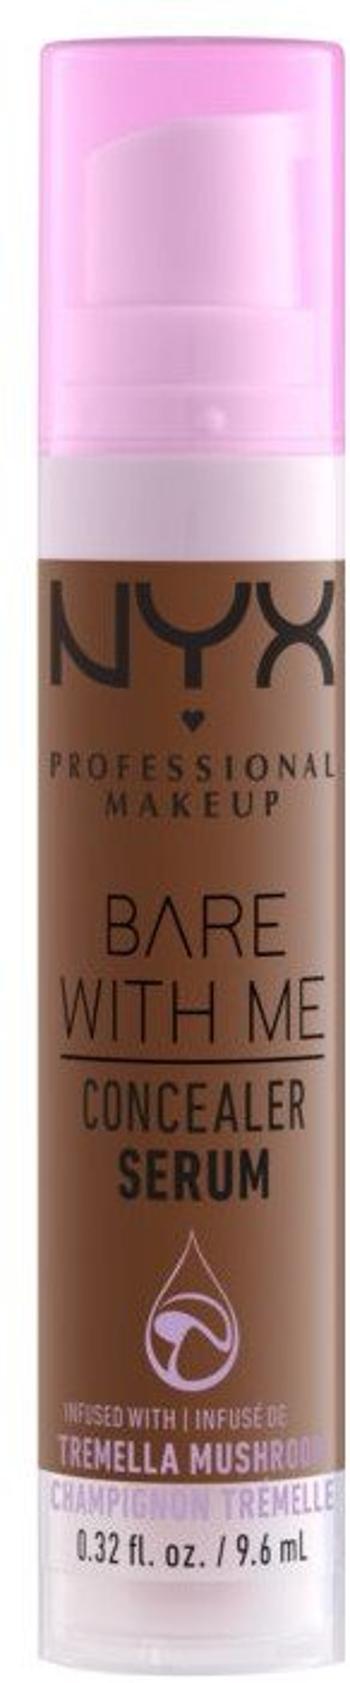 NYX Professional Makeup Bare With Me Zklidňující sérum a korektor 2v1 - odstín 12 Rich 9.6 ml